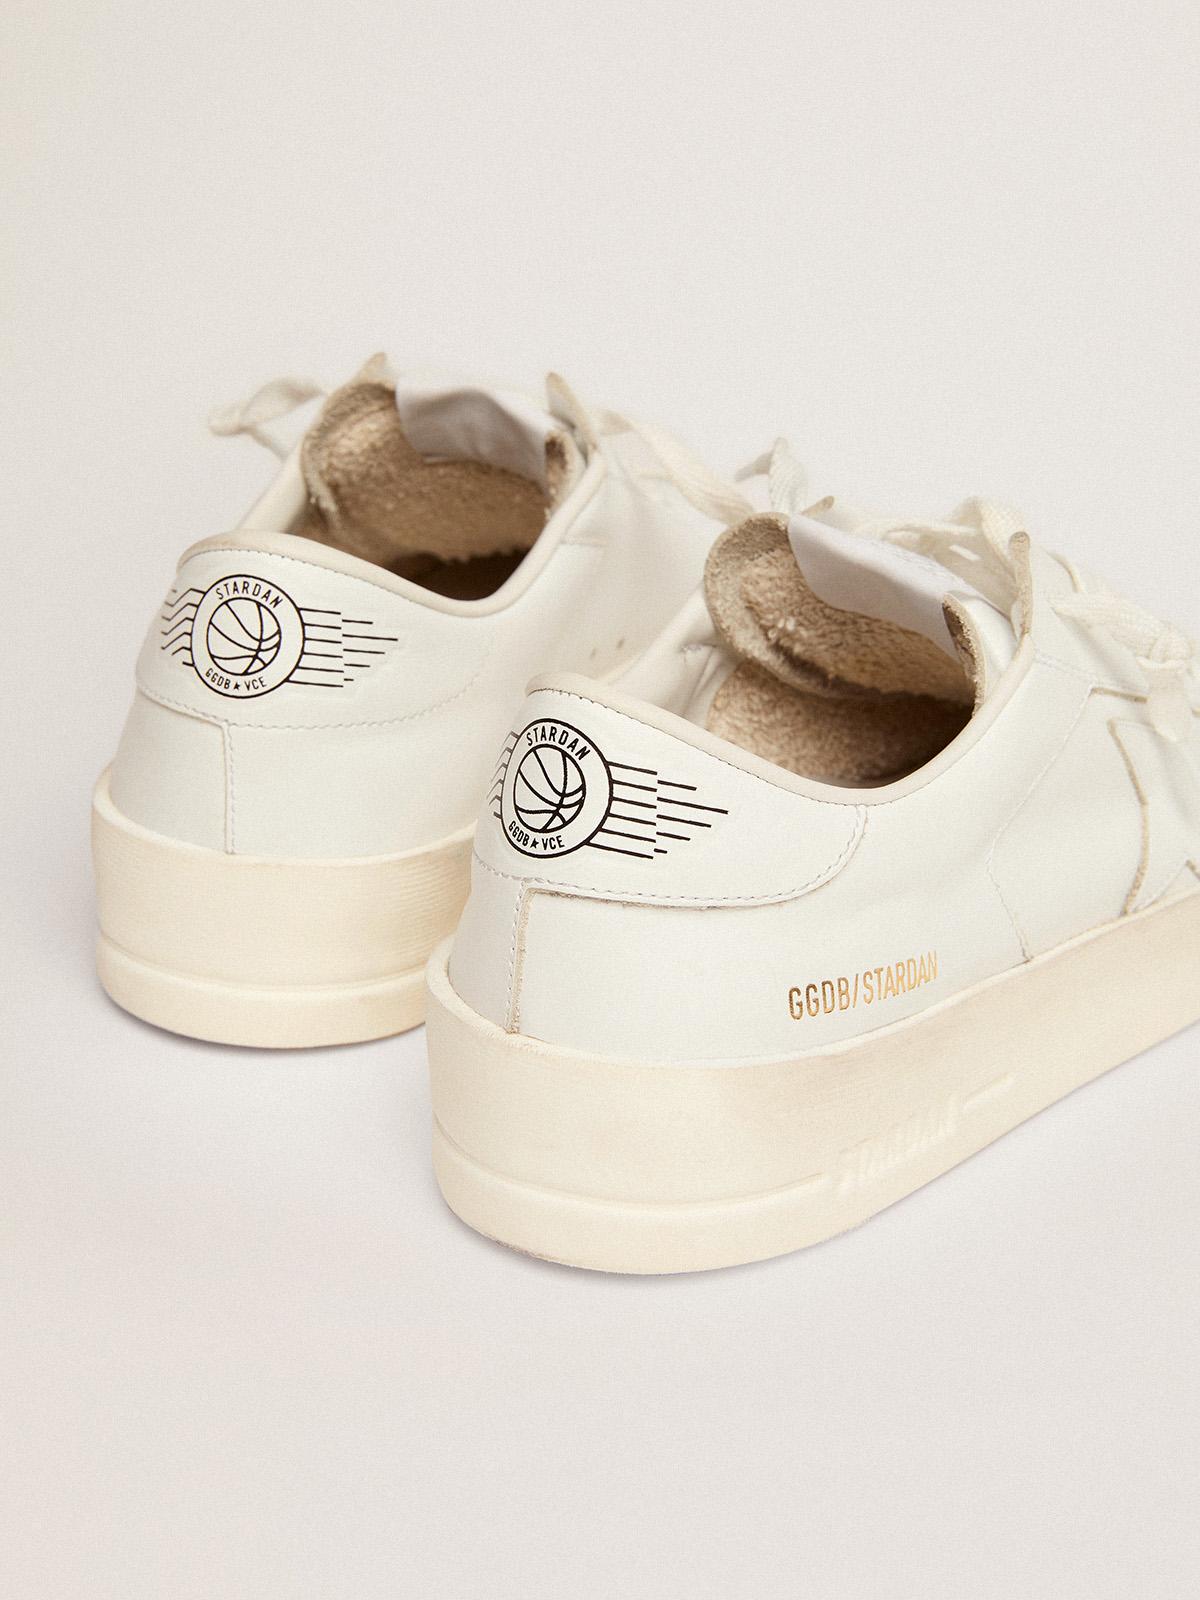 Women's Stardan sneakers in total white leather | Golden Goose